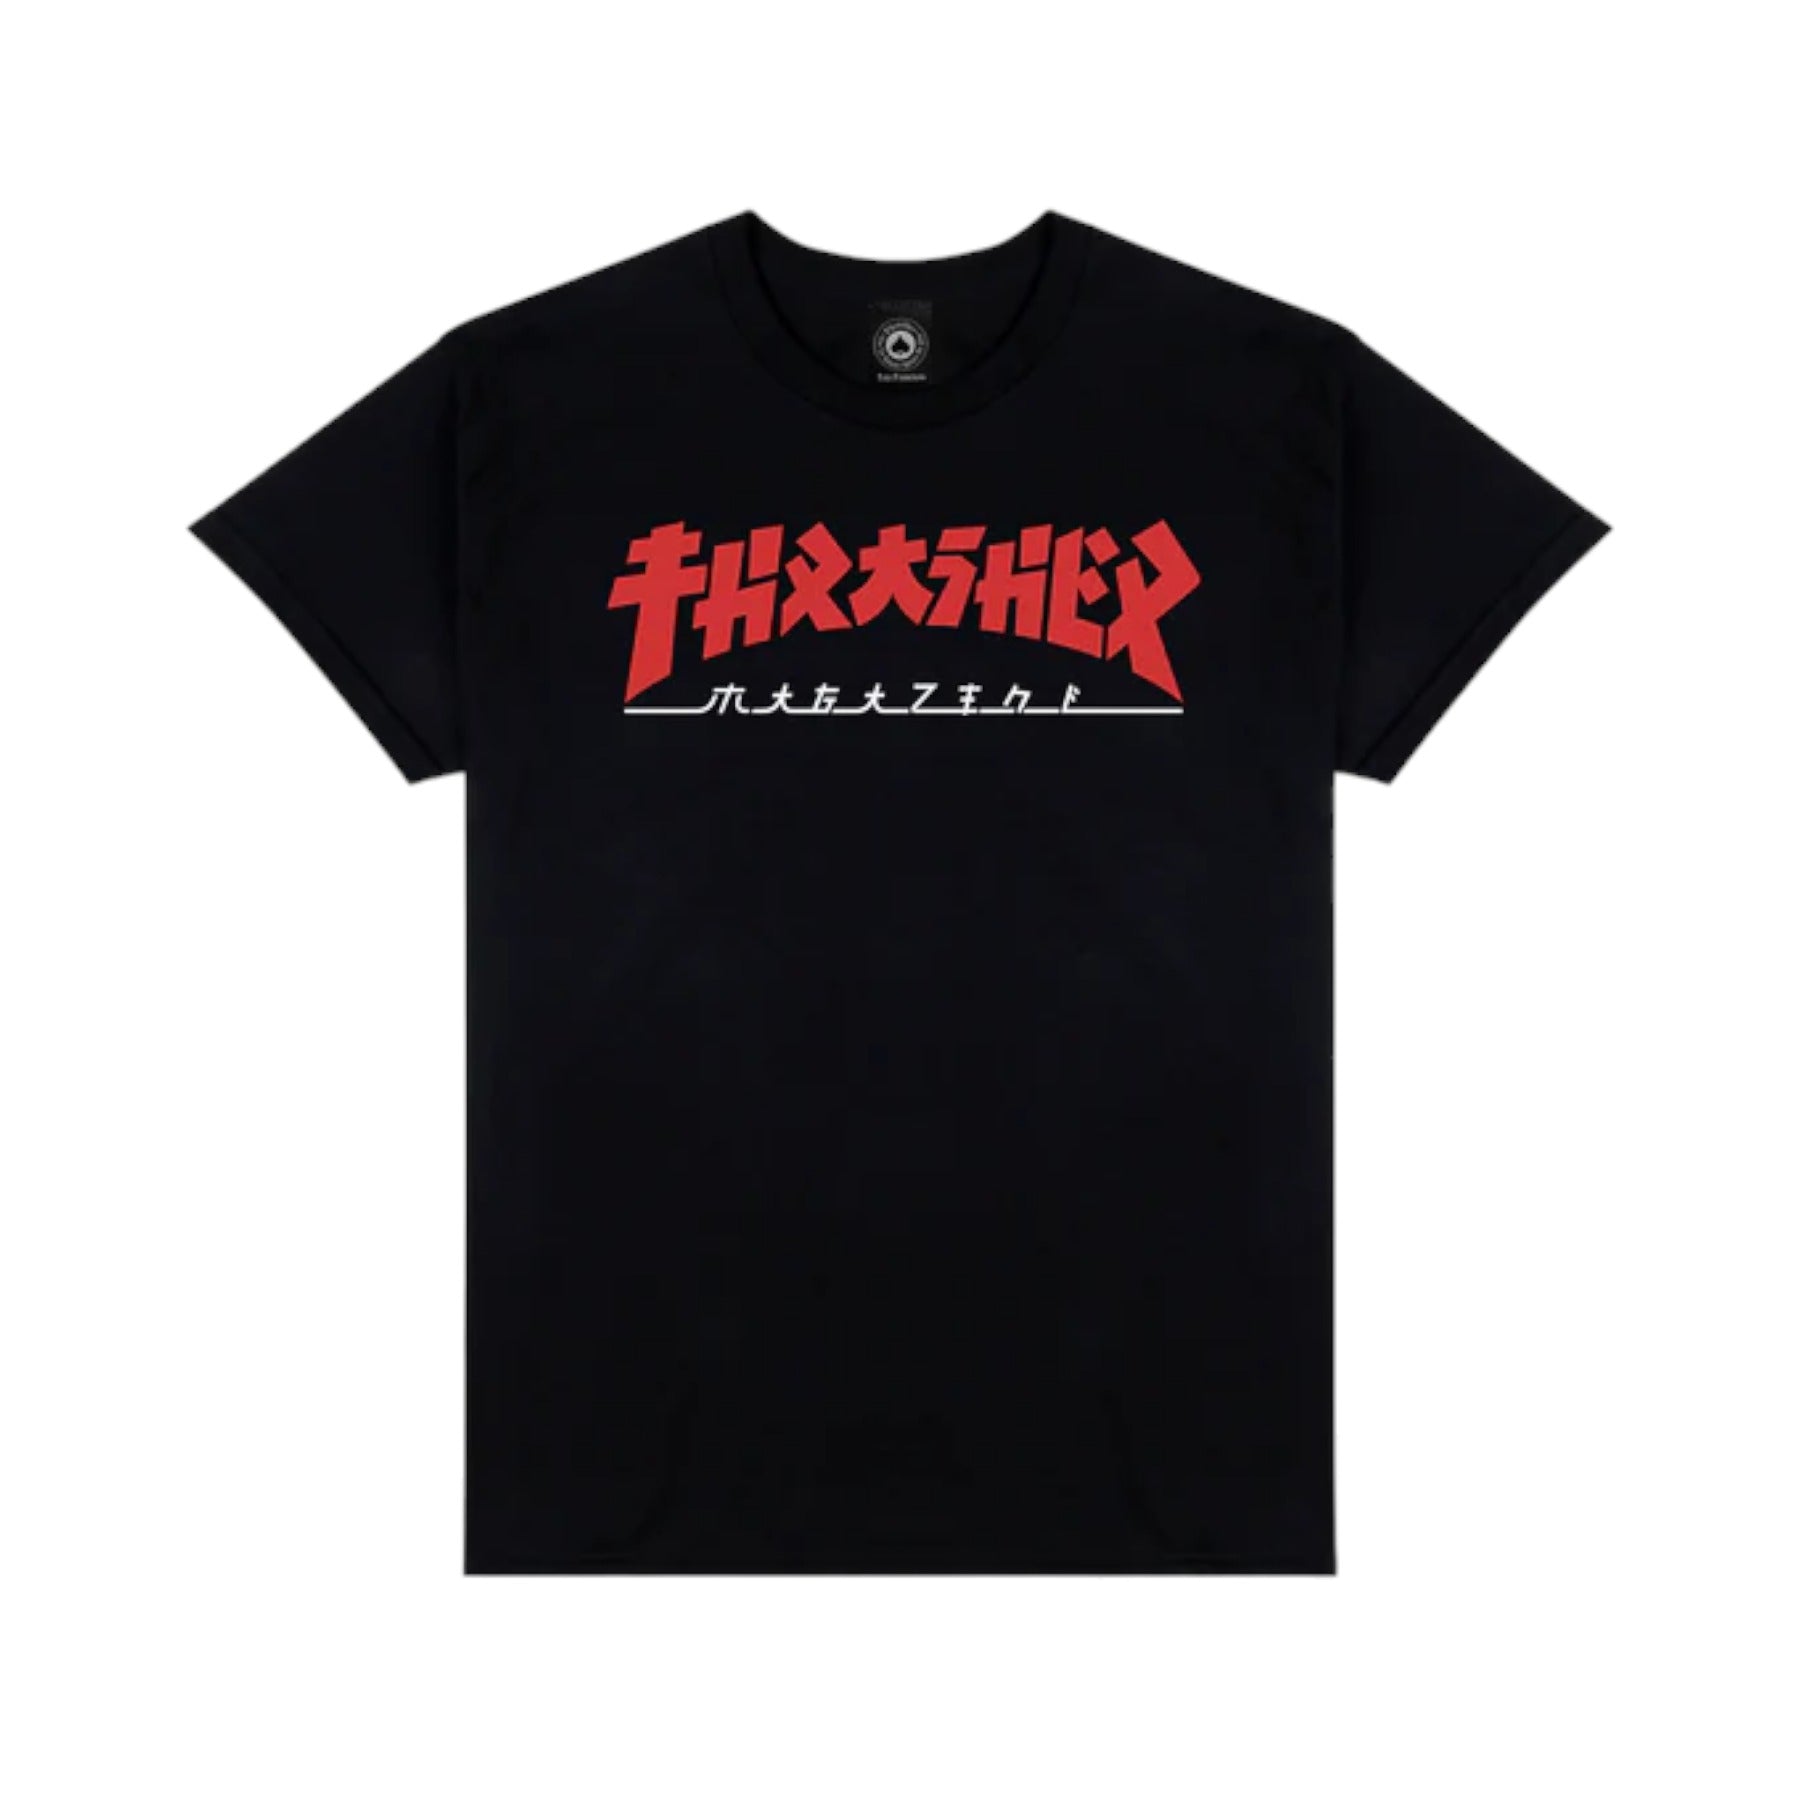 Thrasher Godzilla S/S Tee - Black